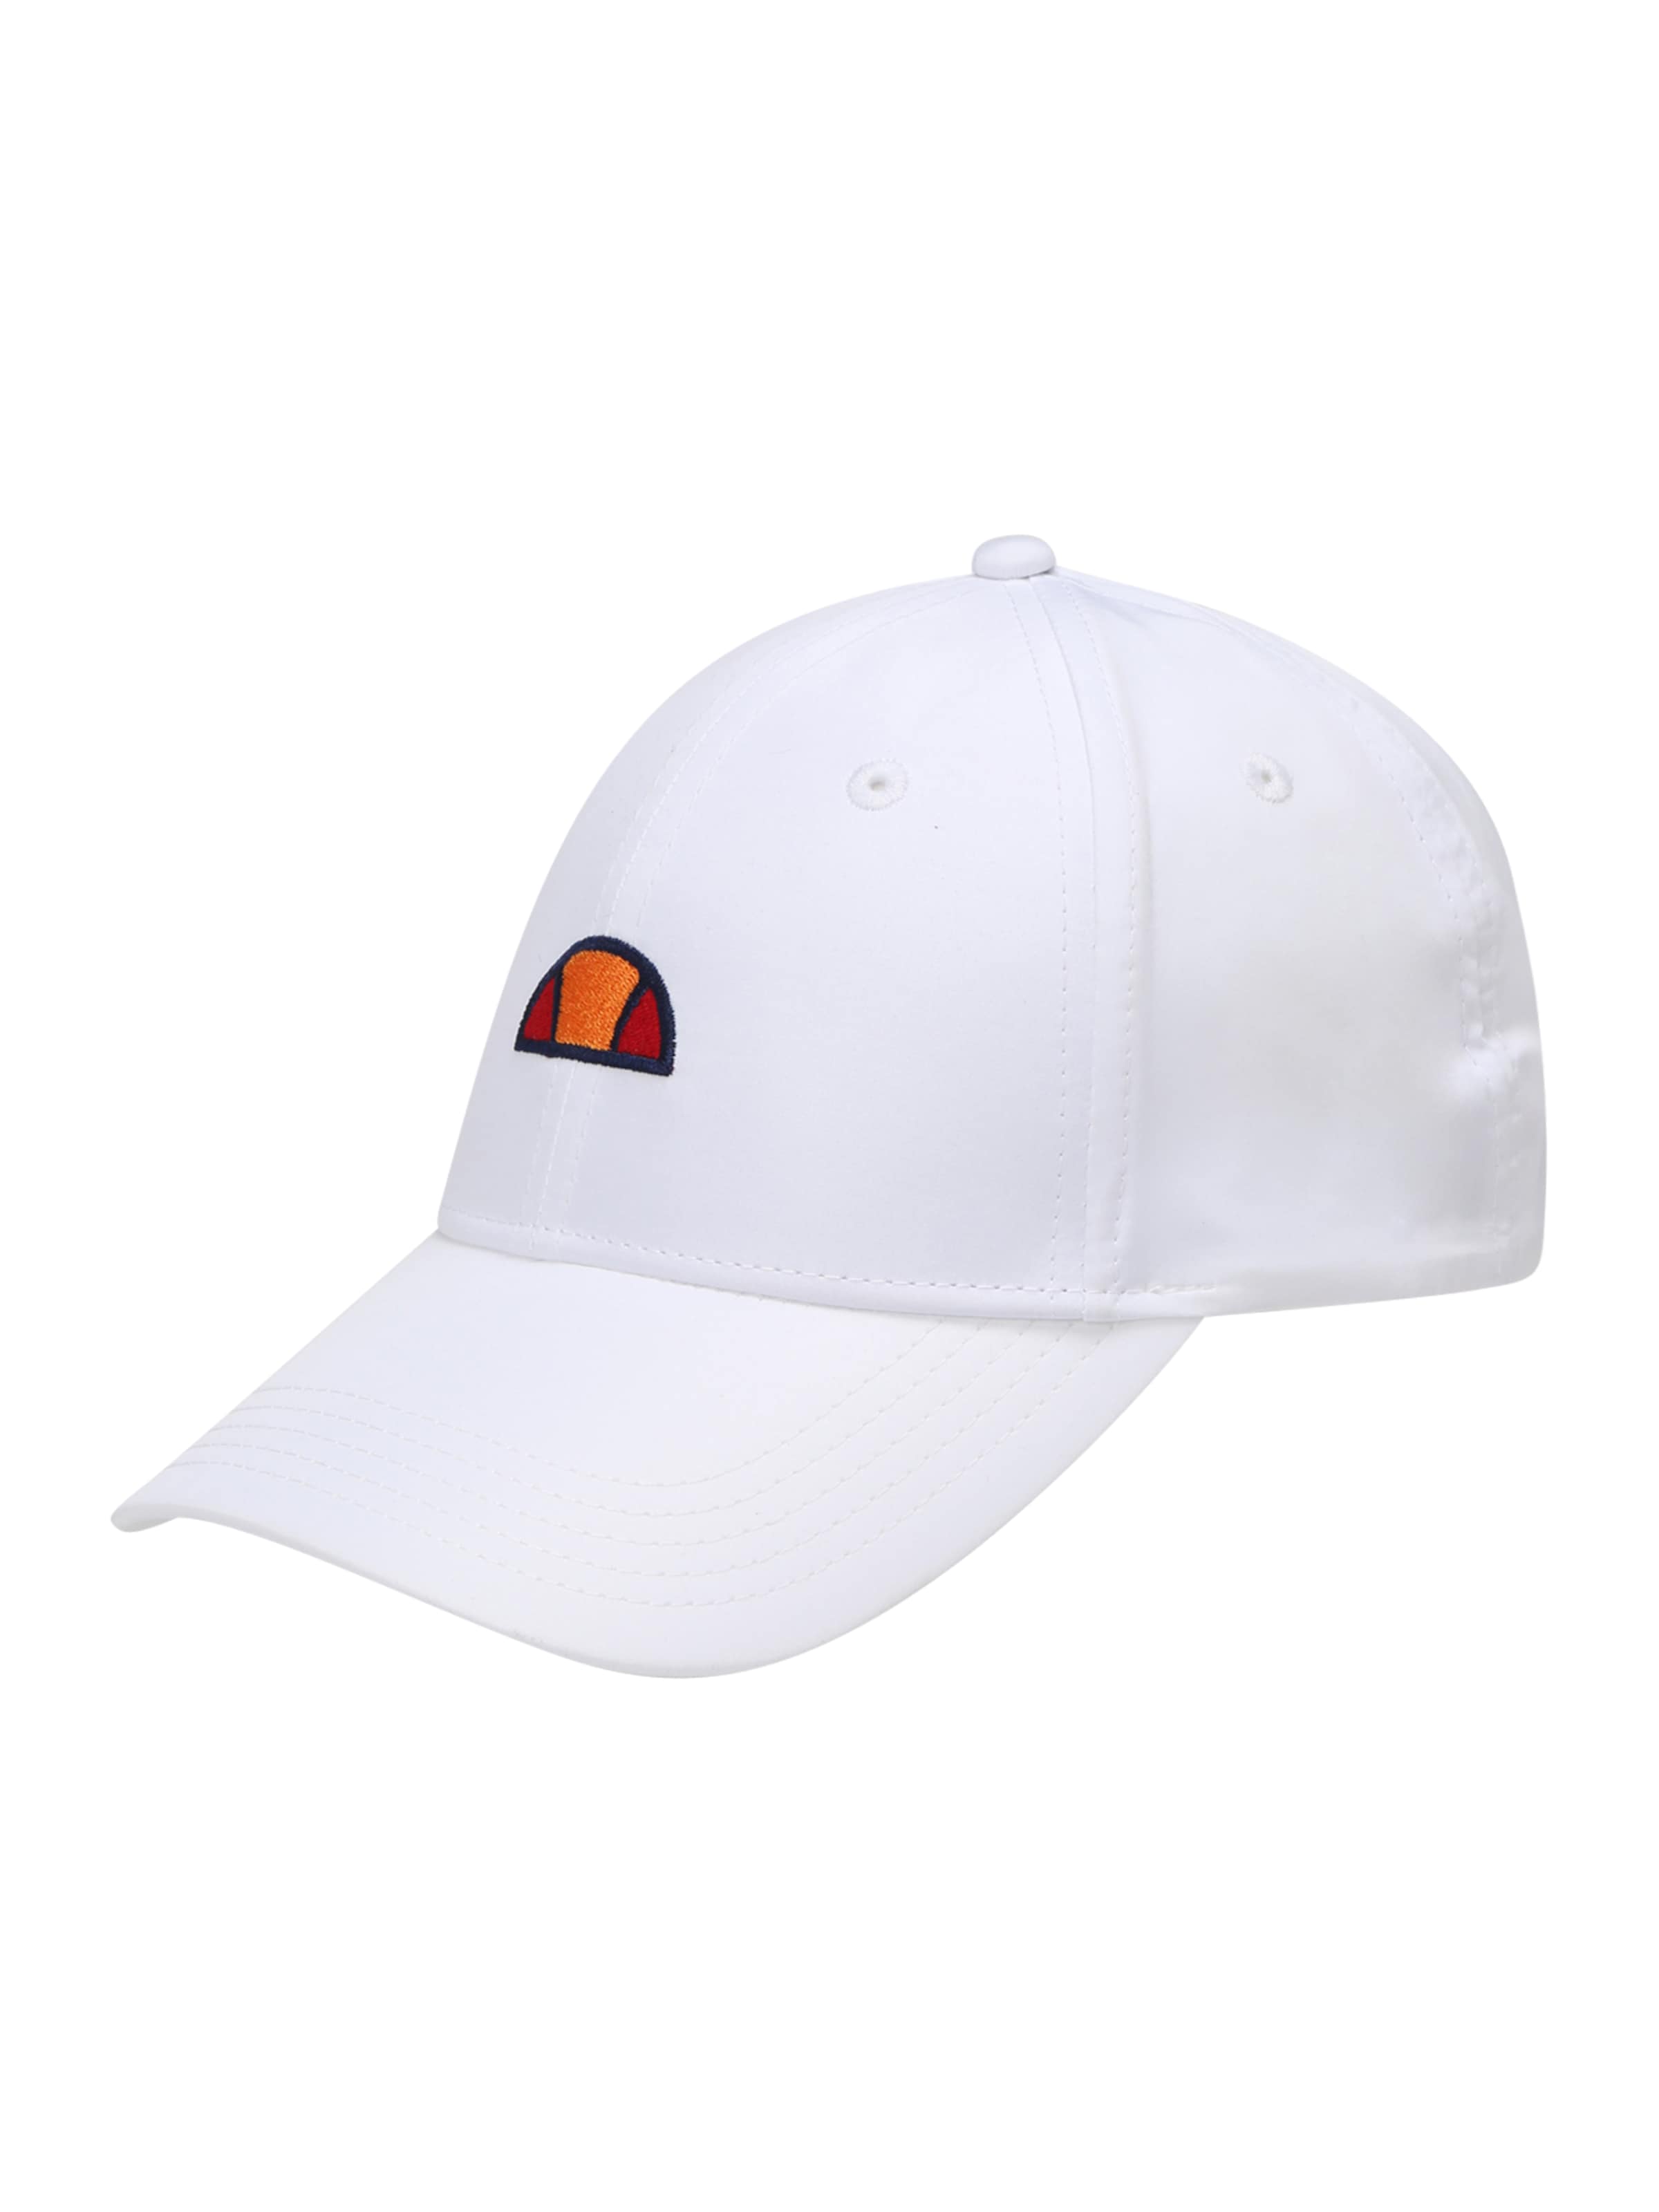 Wed´ze hat and cap WOMEN FASHION Accessories Hat and cap Orange discount 69% Orange Single 